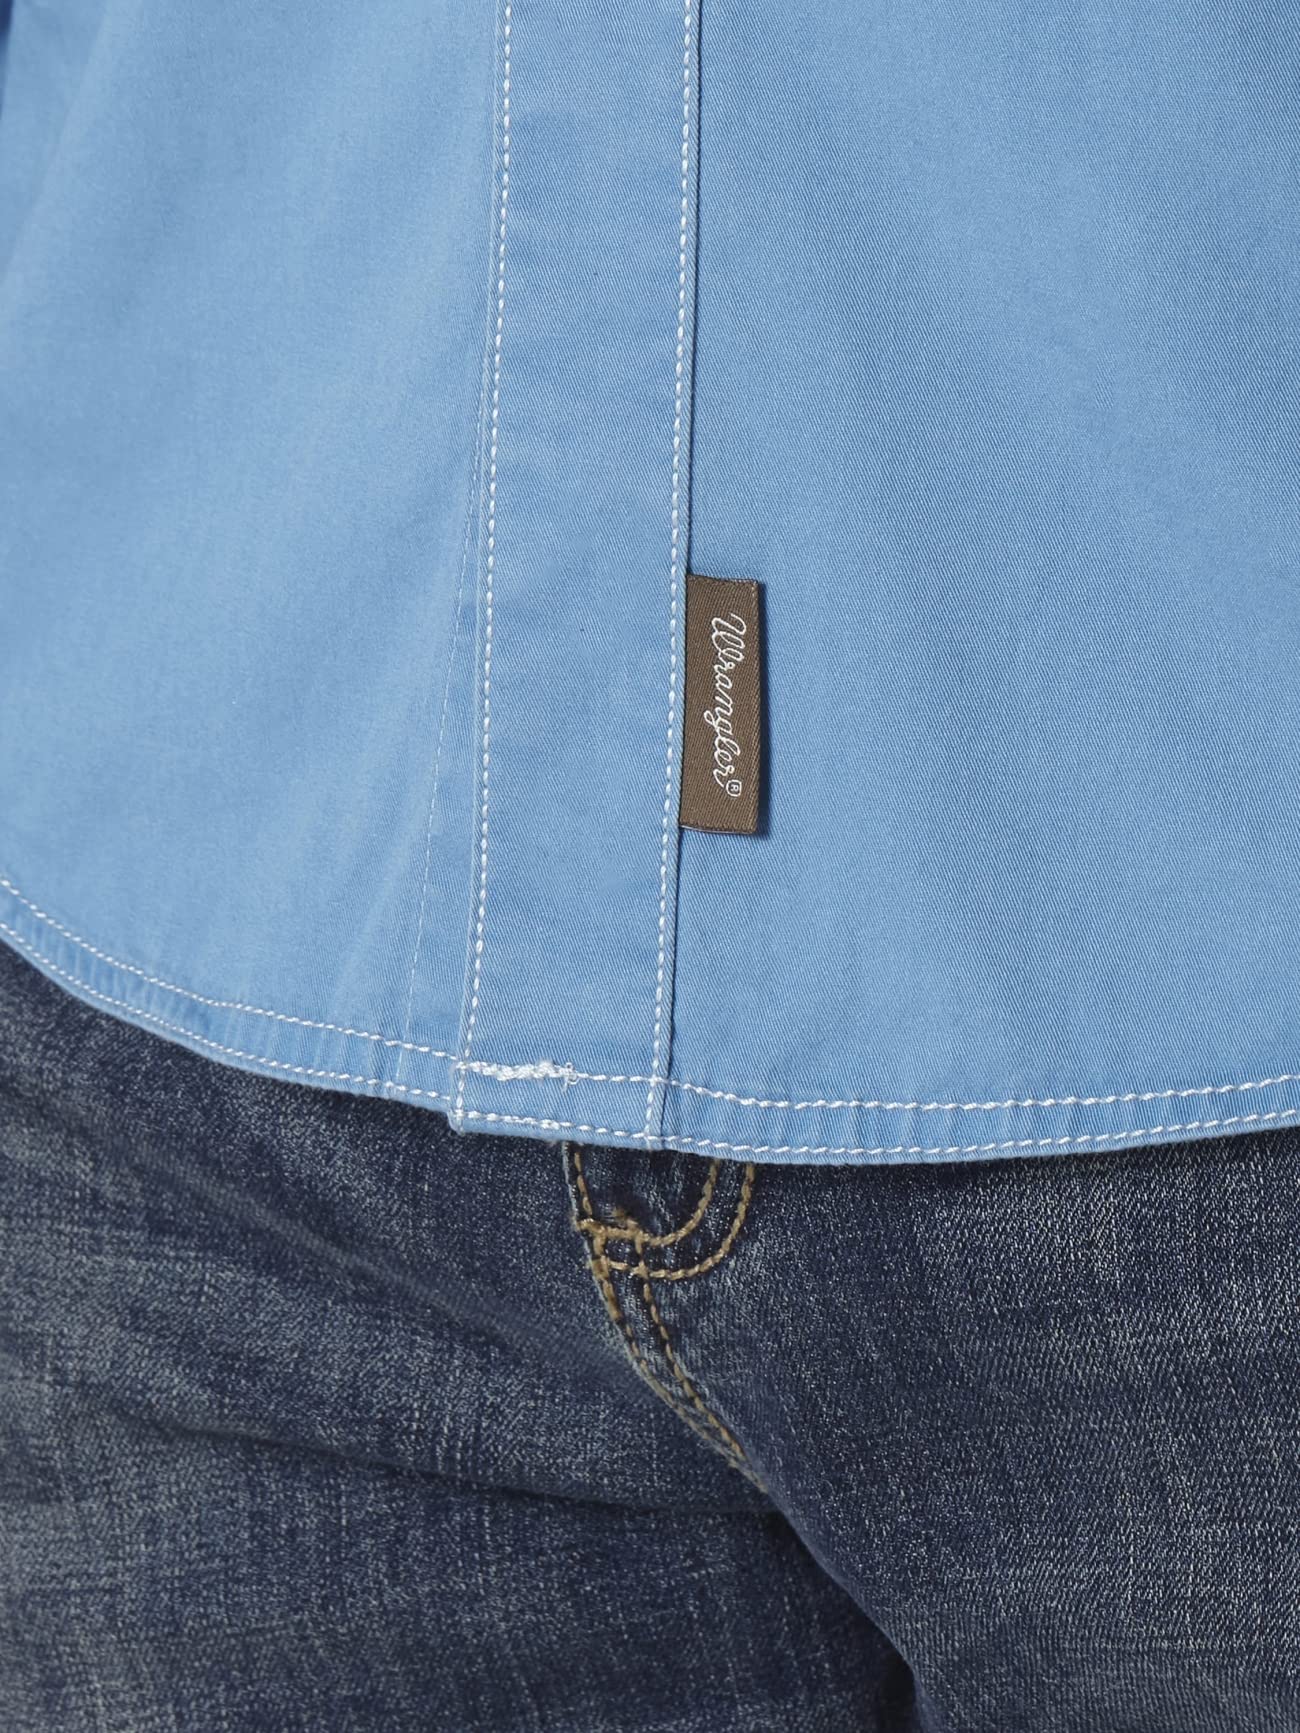 Wrangler Men's Retro Two Pocket Long Sleeve Snap Shirt, Blue, Medium